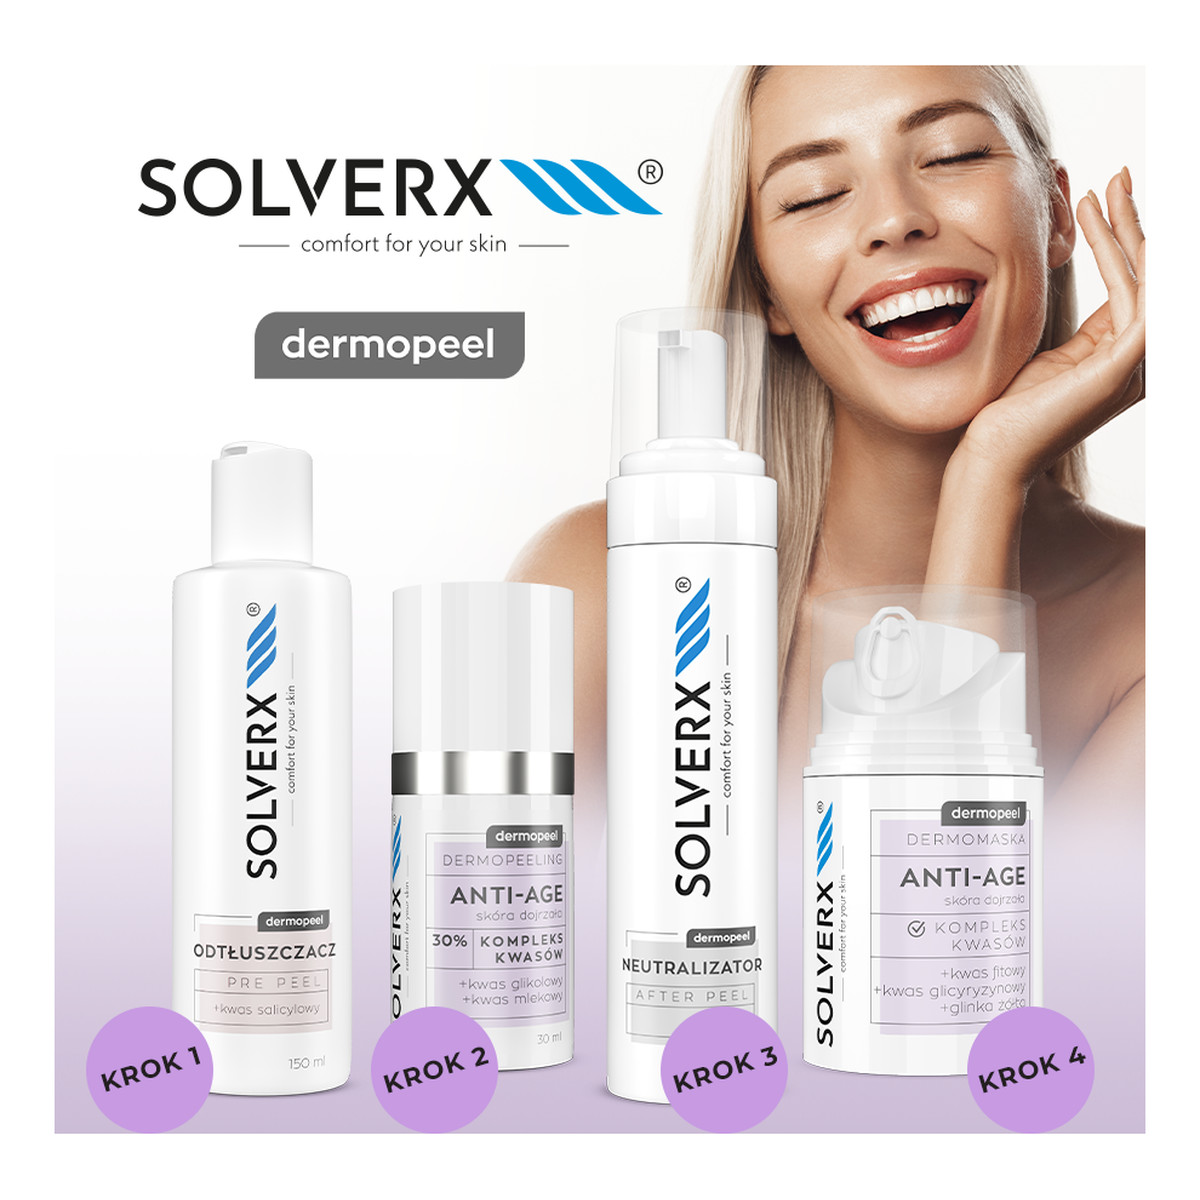 Solverx Dermopeel Dermopeeling Vit C - Kompleks Kwasów 30% (askorbinowy, laktobionowy) 30ml